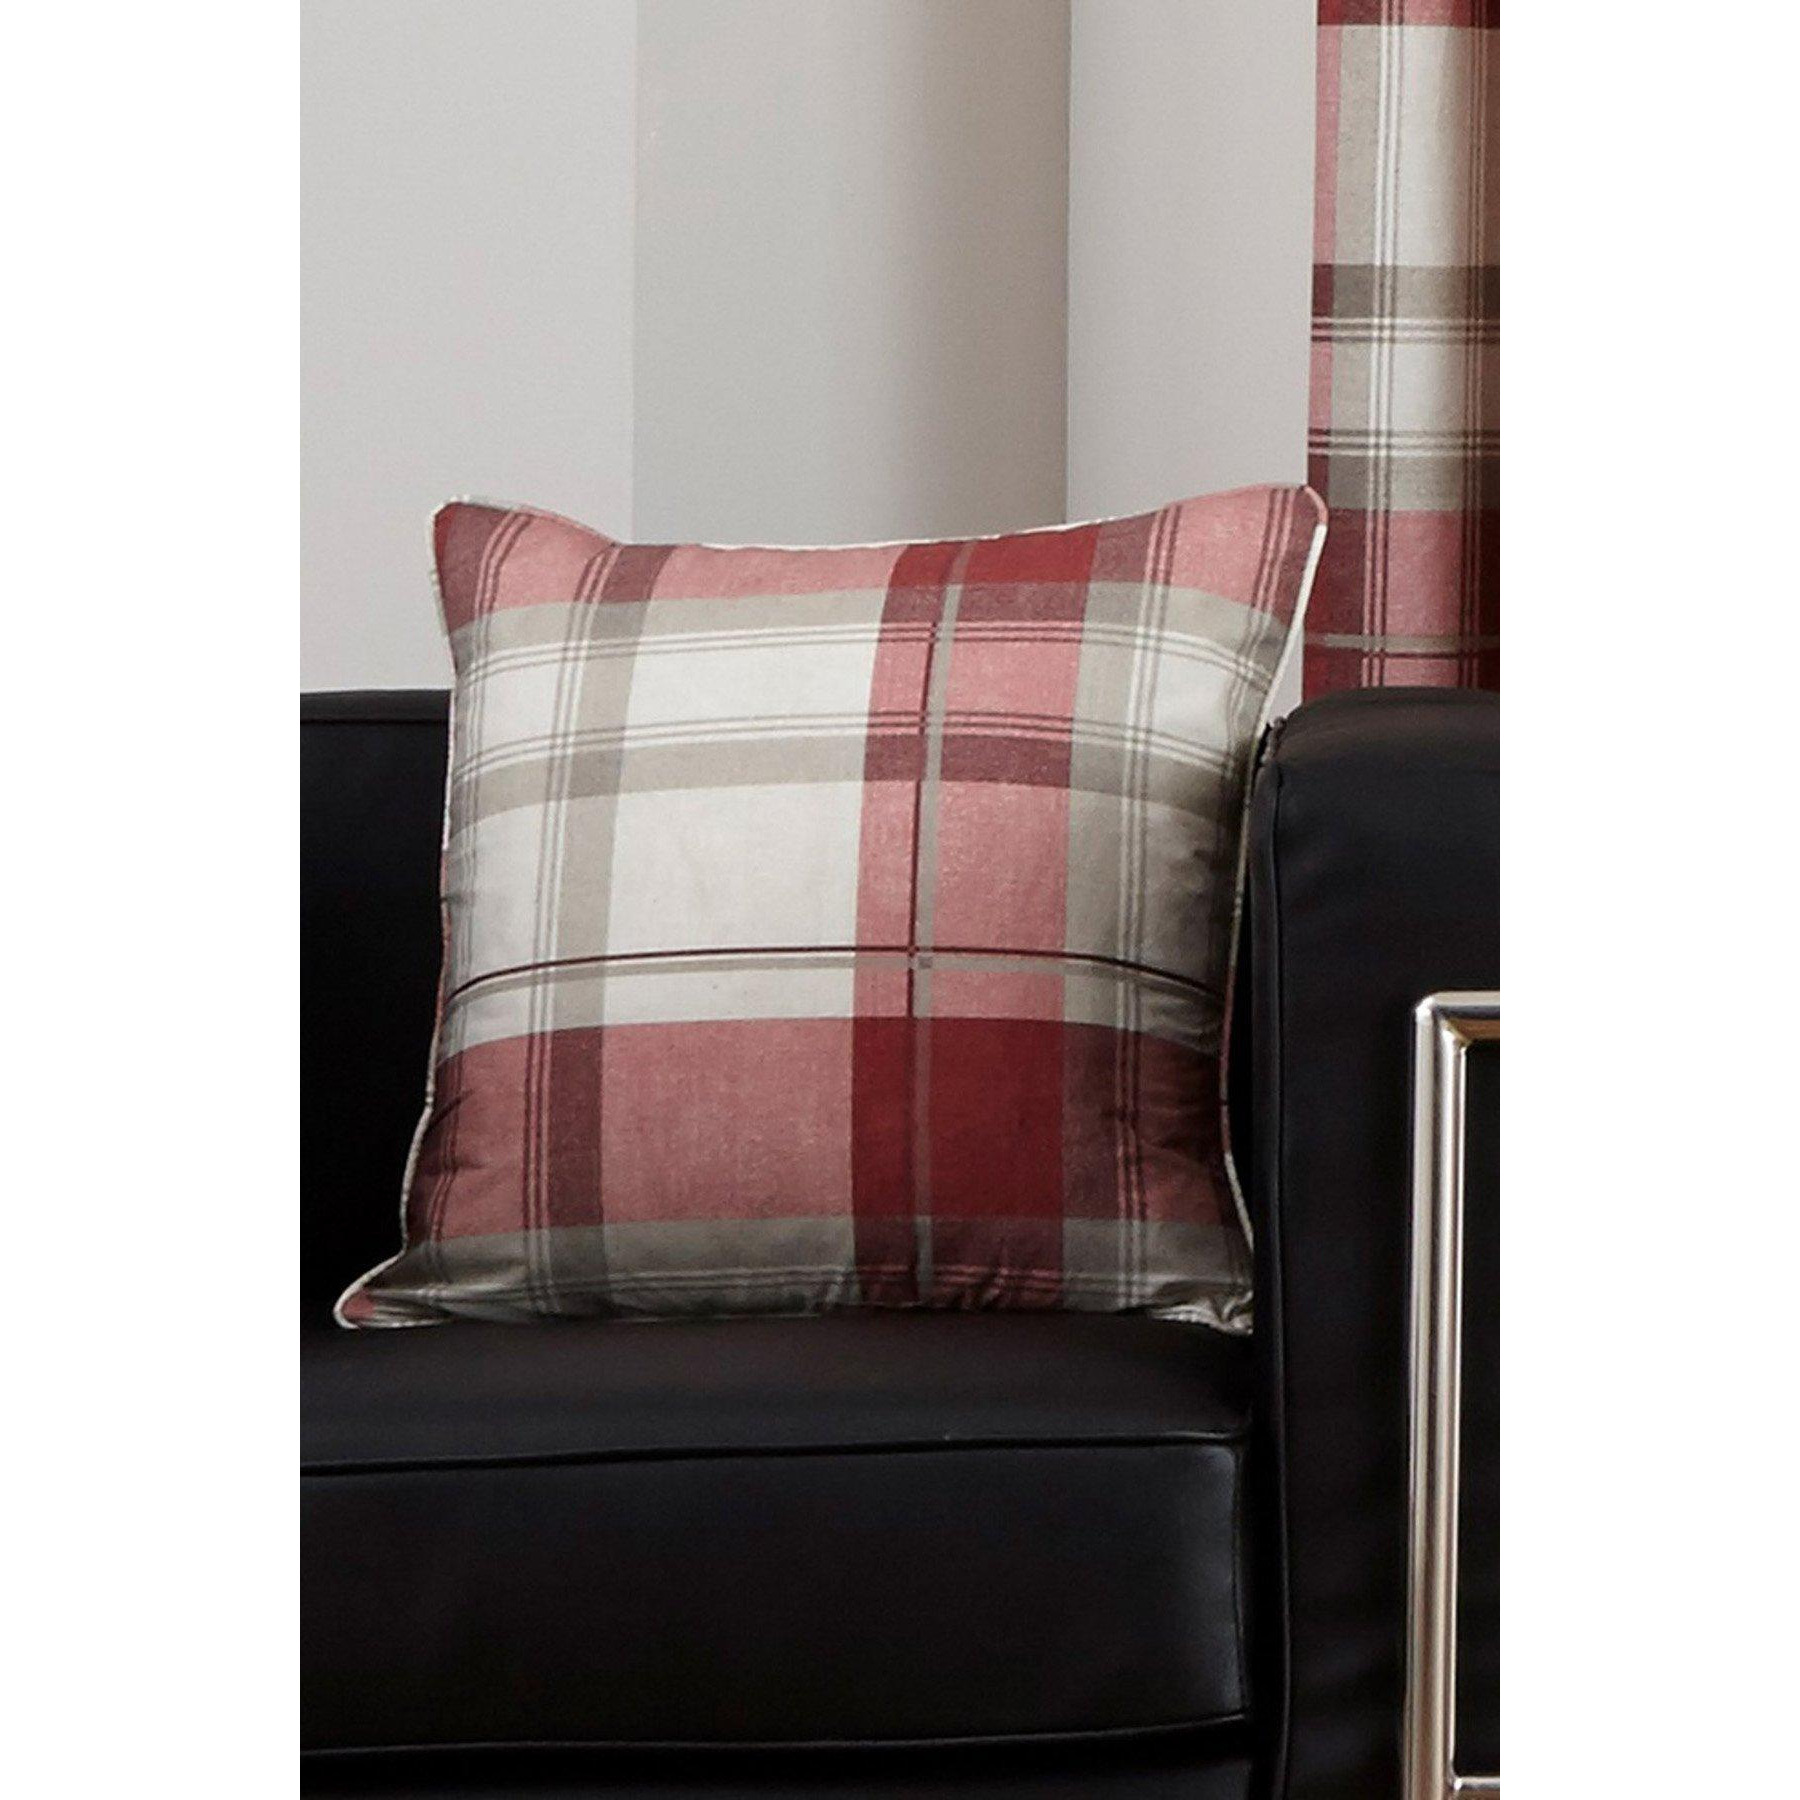 'Balmoral Tartan' Warm Woven Check 100% Cotton Filled Cushion - image 1